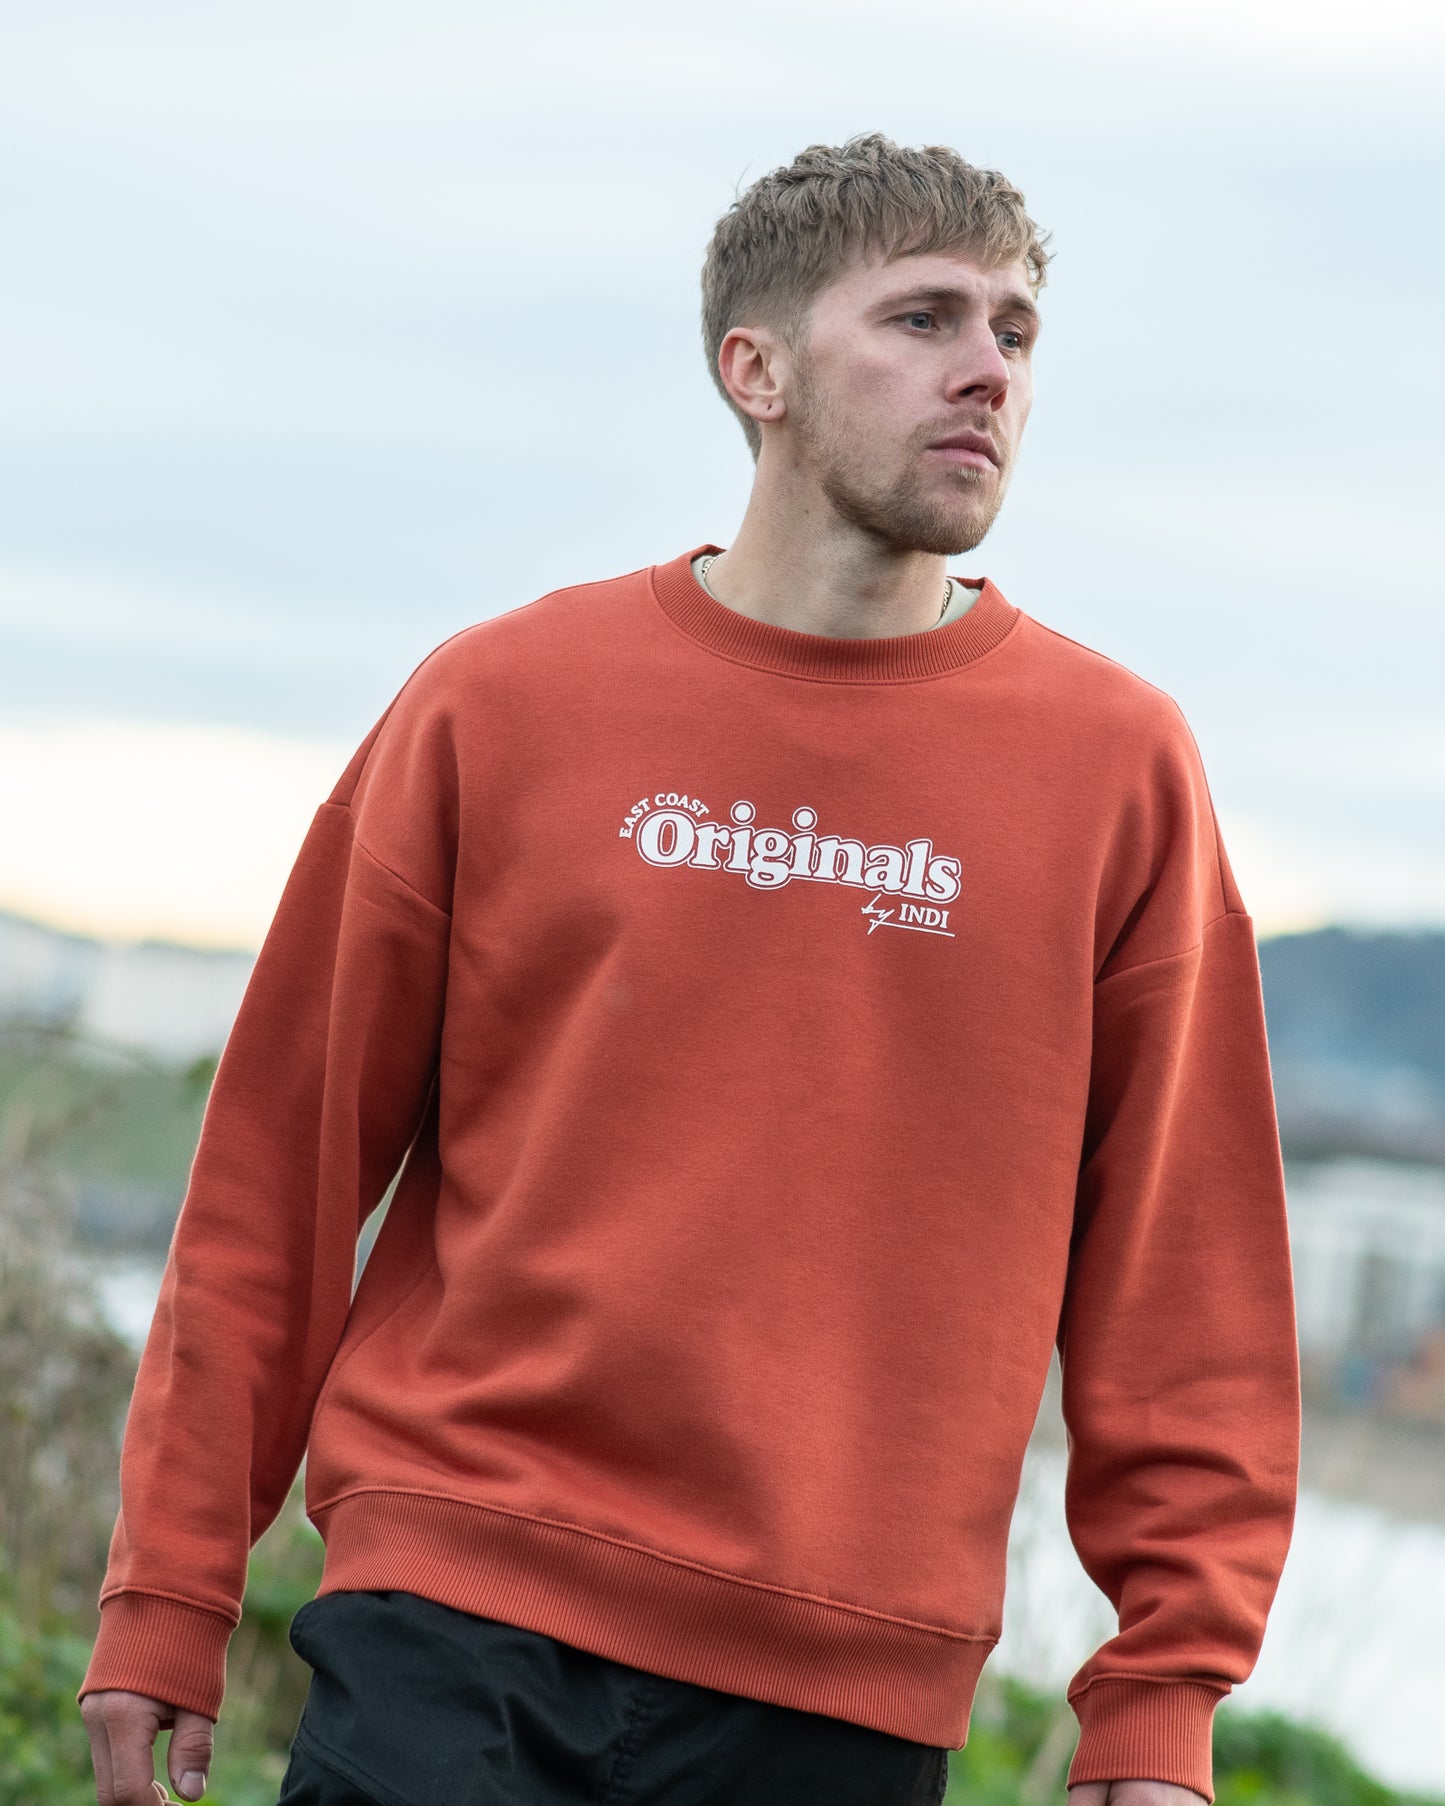 'East Coast Originals' Oversized Sweater in Brick